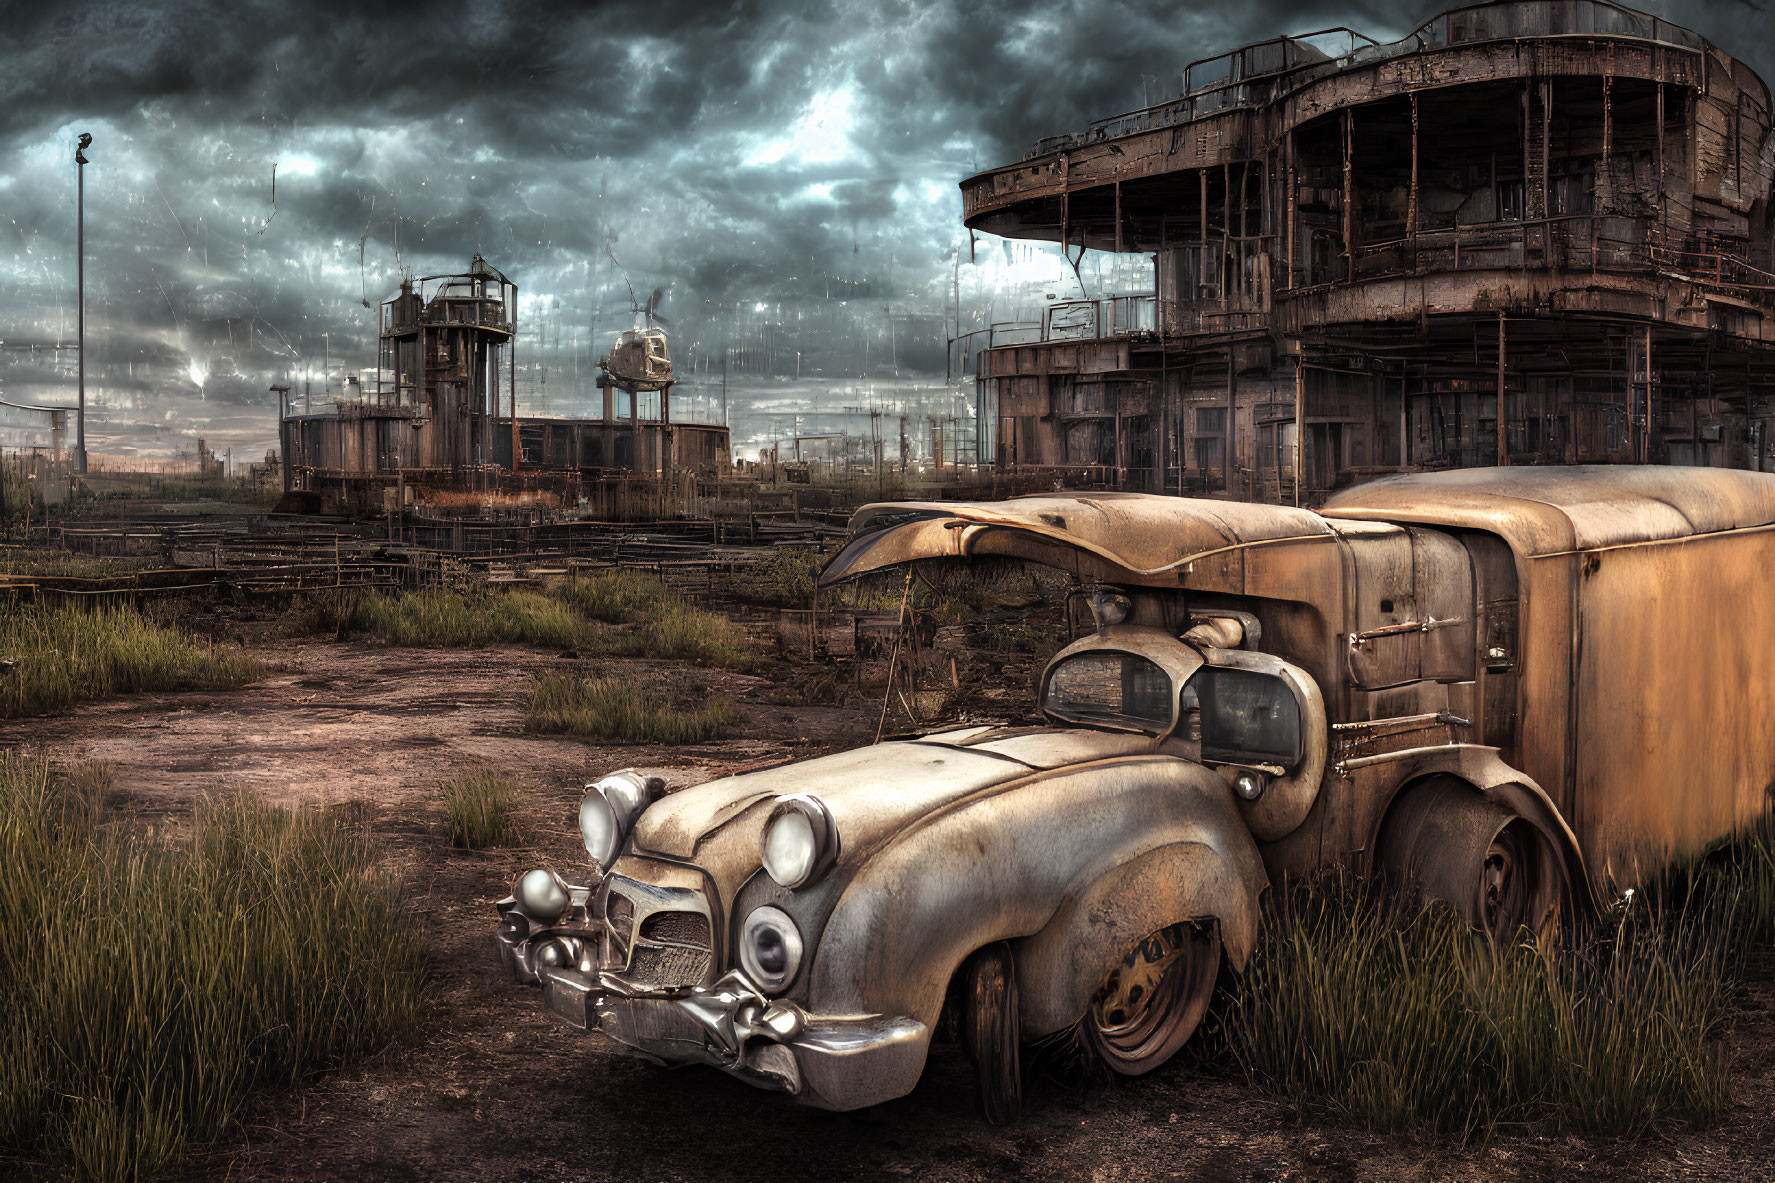 Abandoned vintage car in industrial wasteland under stormy sky